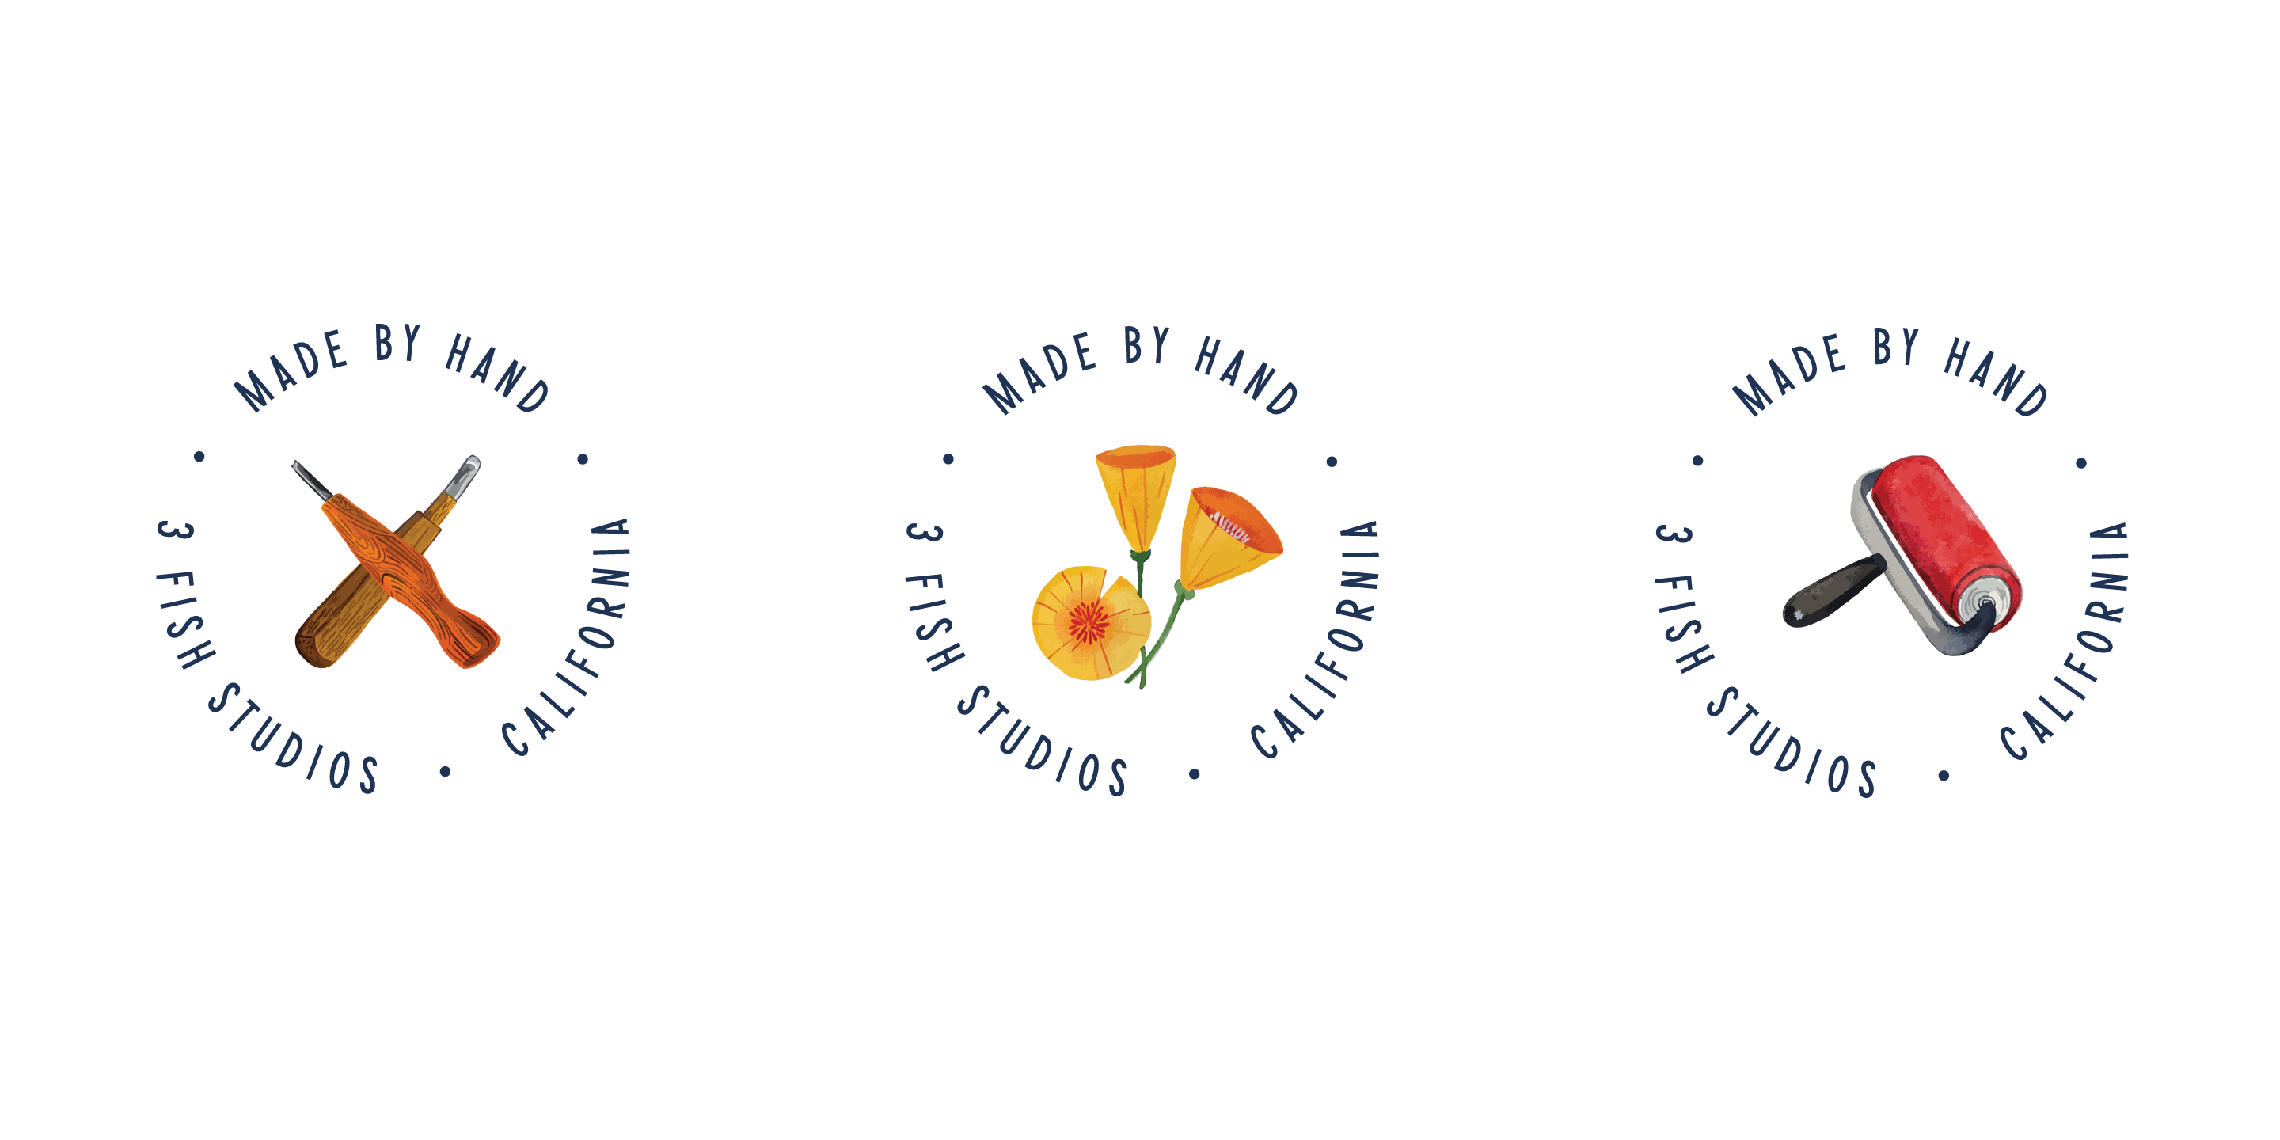 3 Fish Studios - round stamp design for an artist studio.